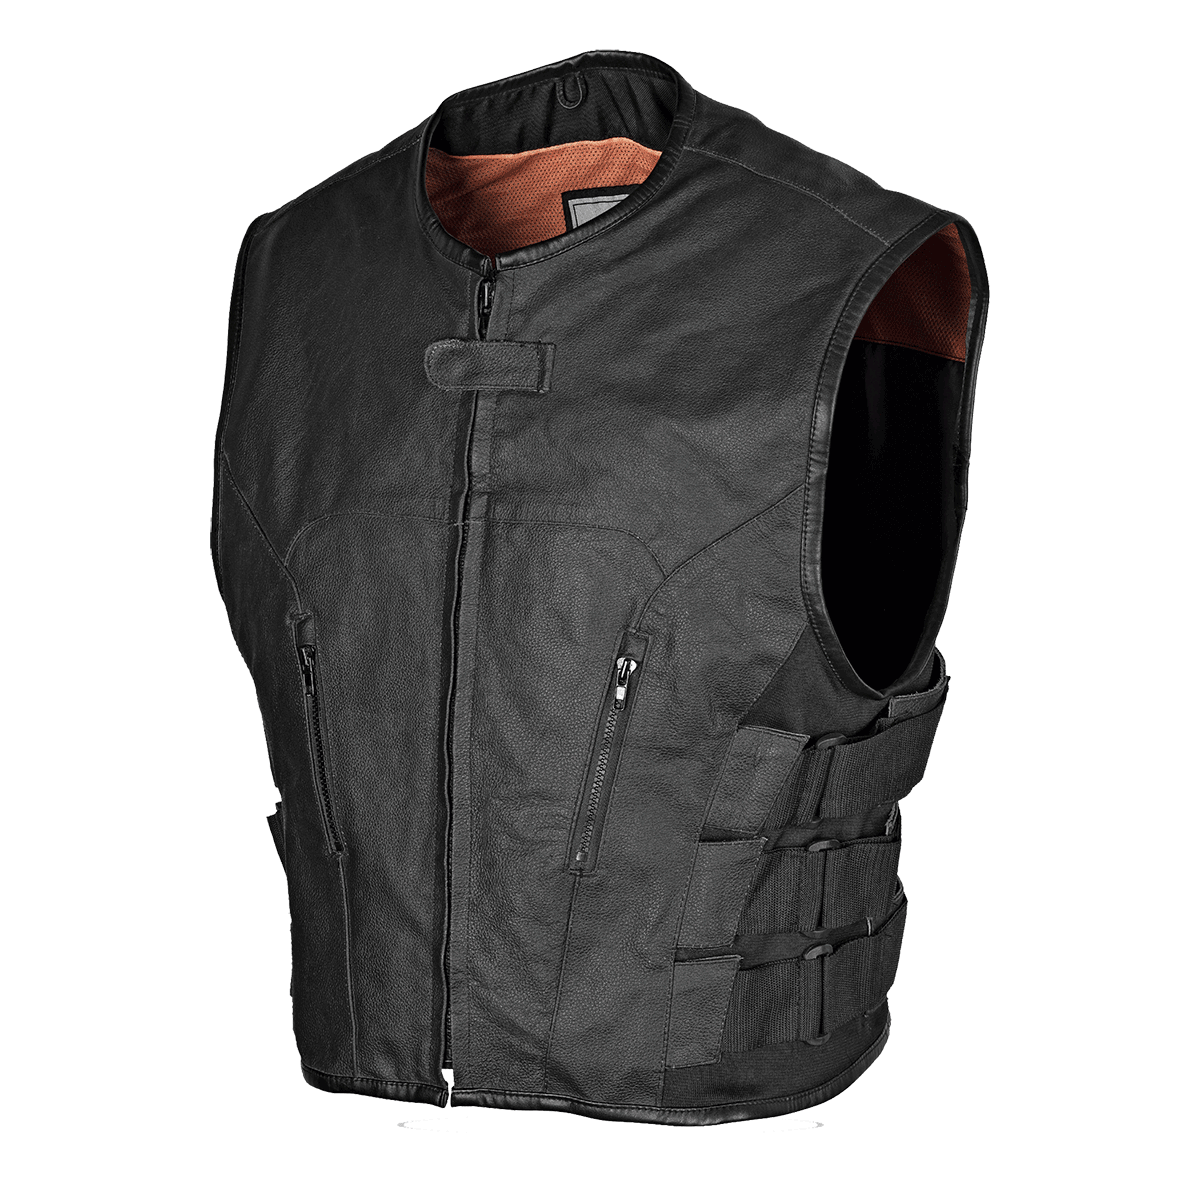 Vance Men's Basic Leather Tactical Style Vest